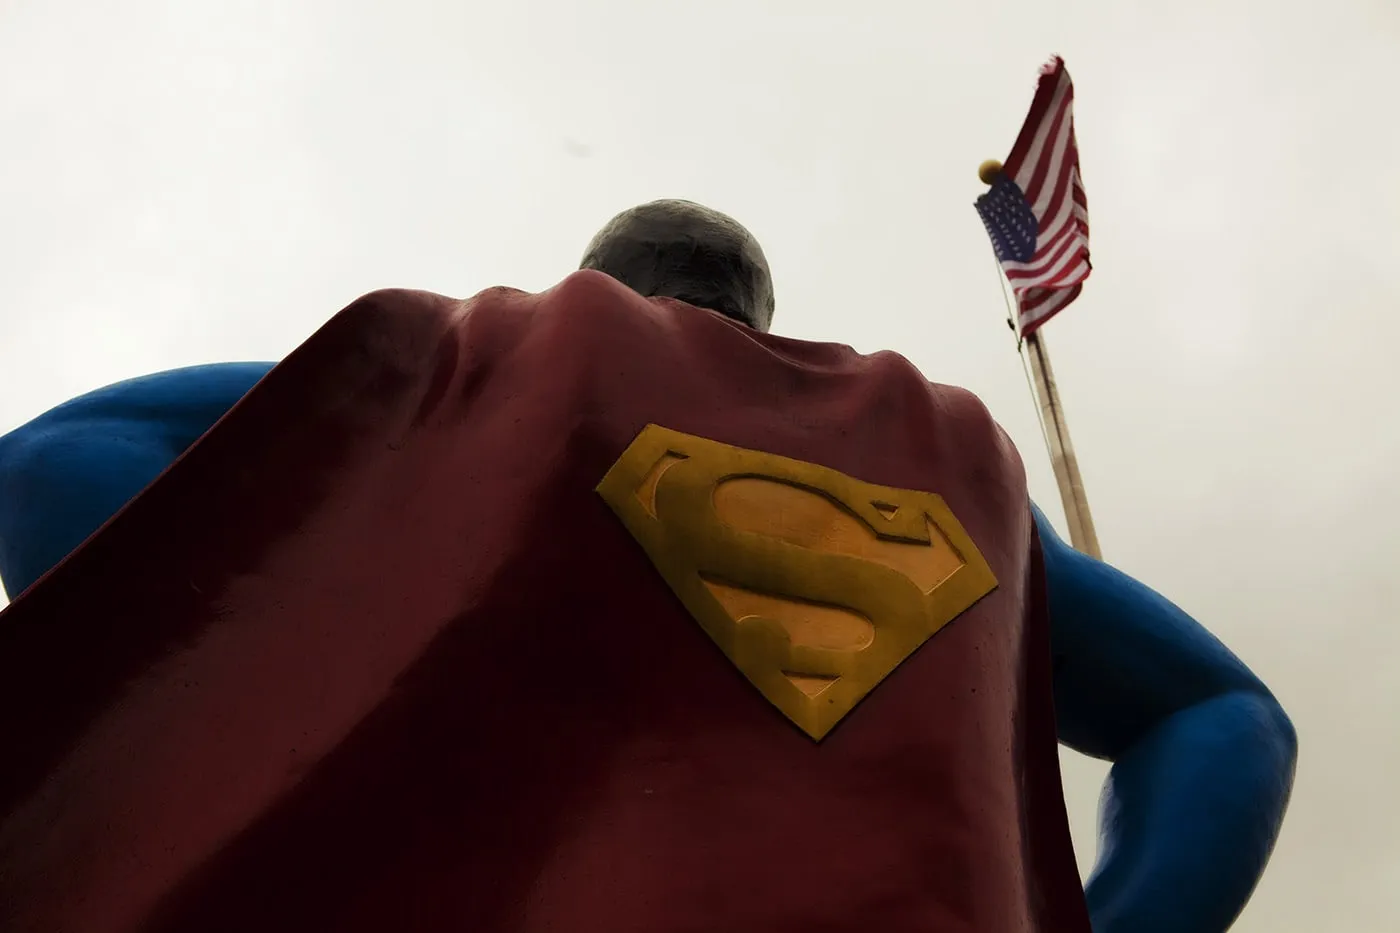 Roadside Attraction - Giant Superman statue in Metropolis, Illinois.